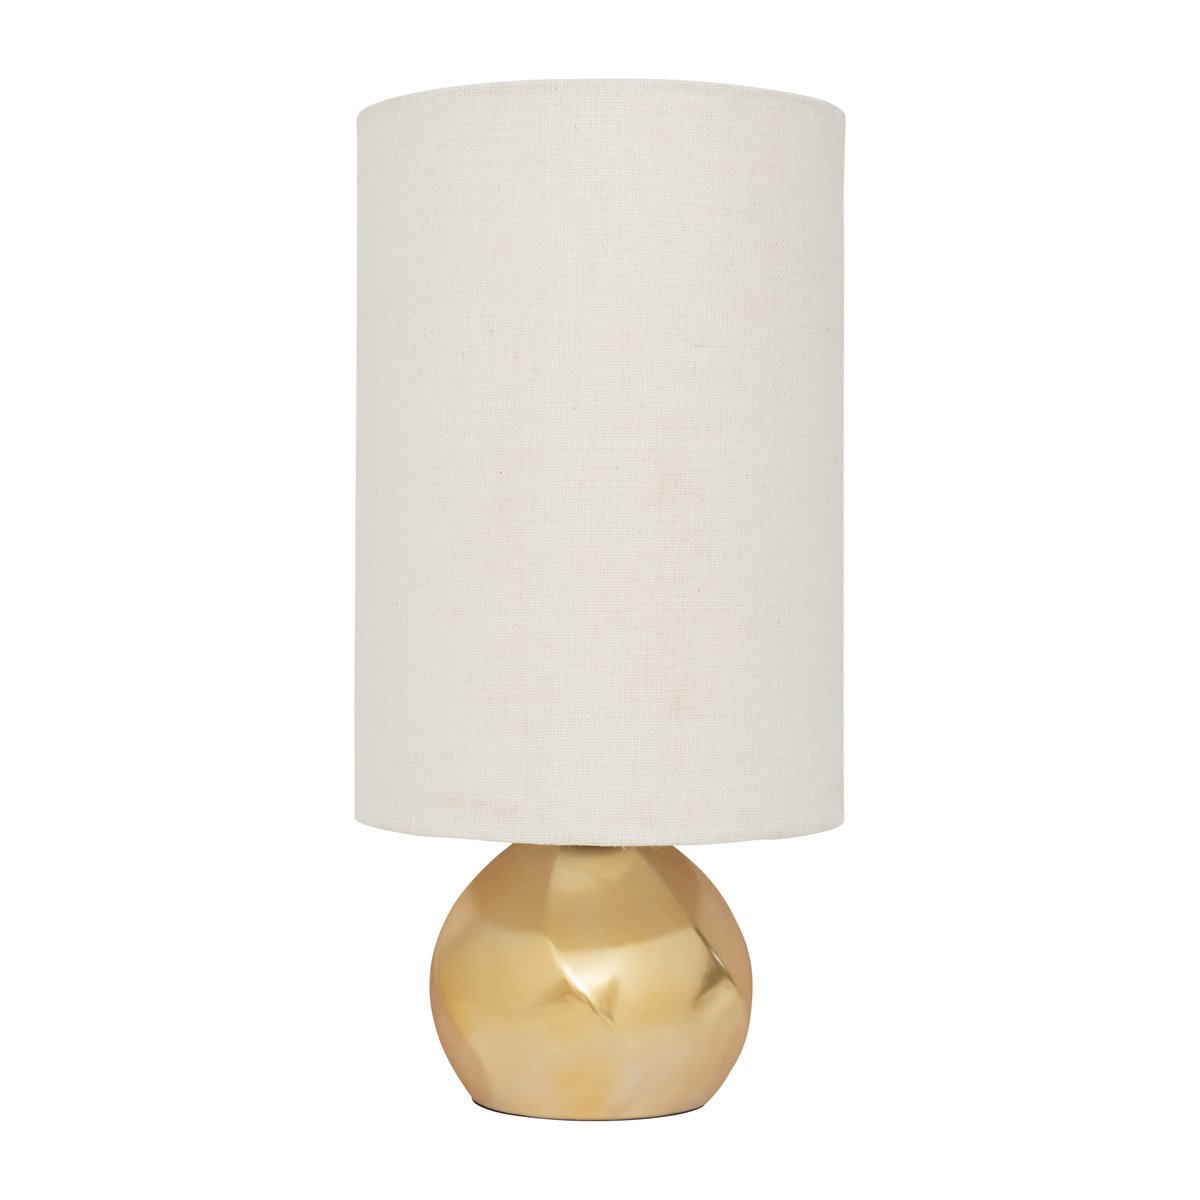 URBAN NATURE CULTURE Suki tafellamp Ø22,5x43 cm Gold-white